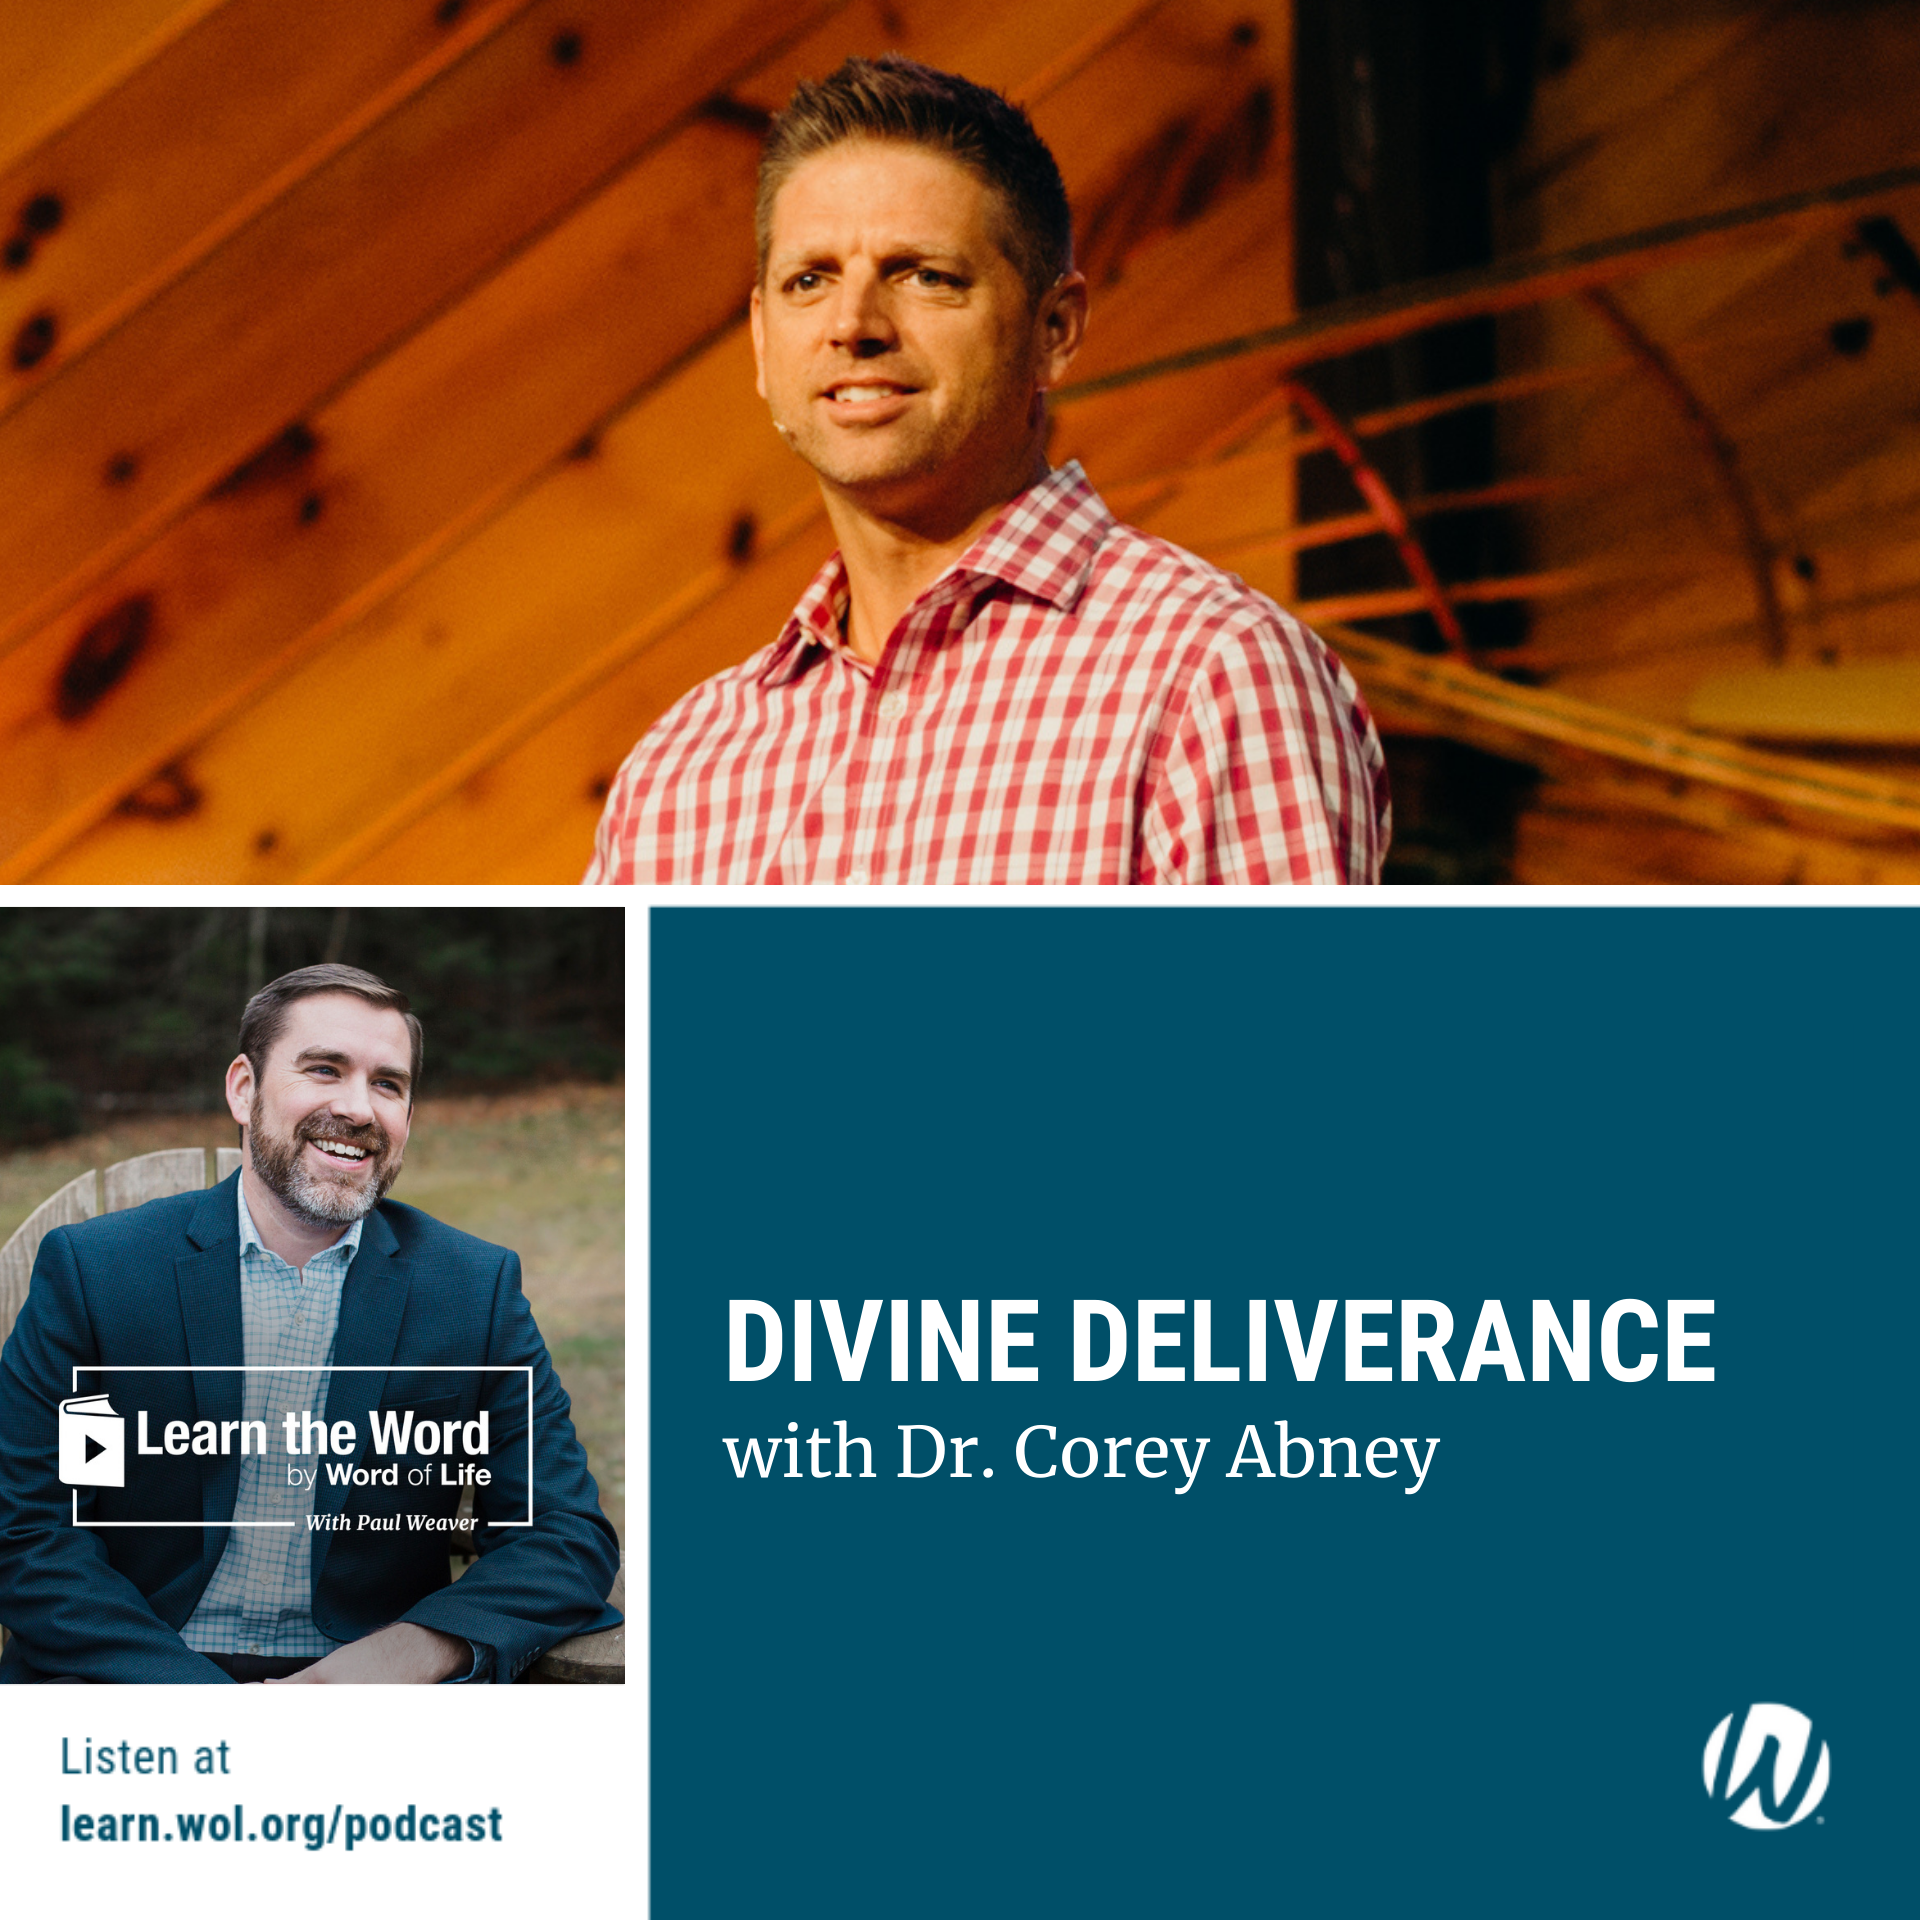 LTW 198 - Divine Deliverance with Dr. Corey Abney